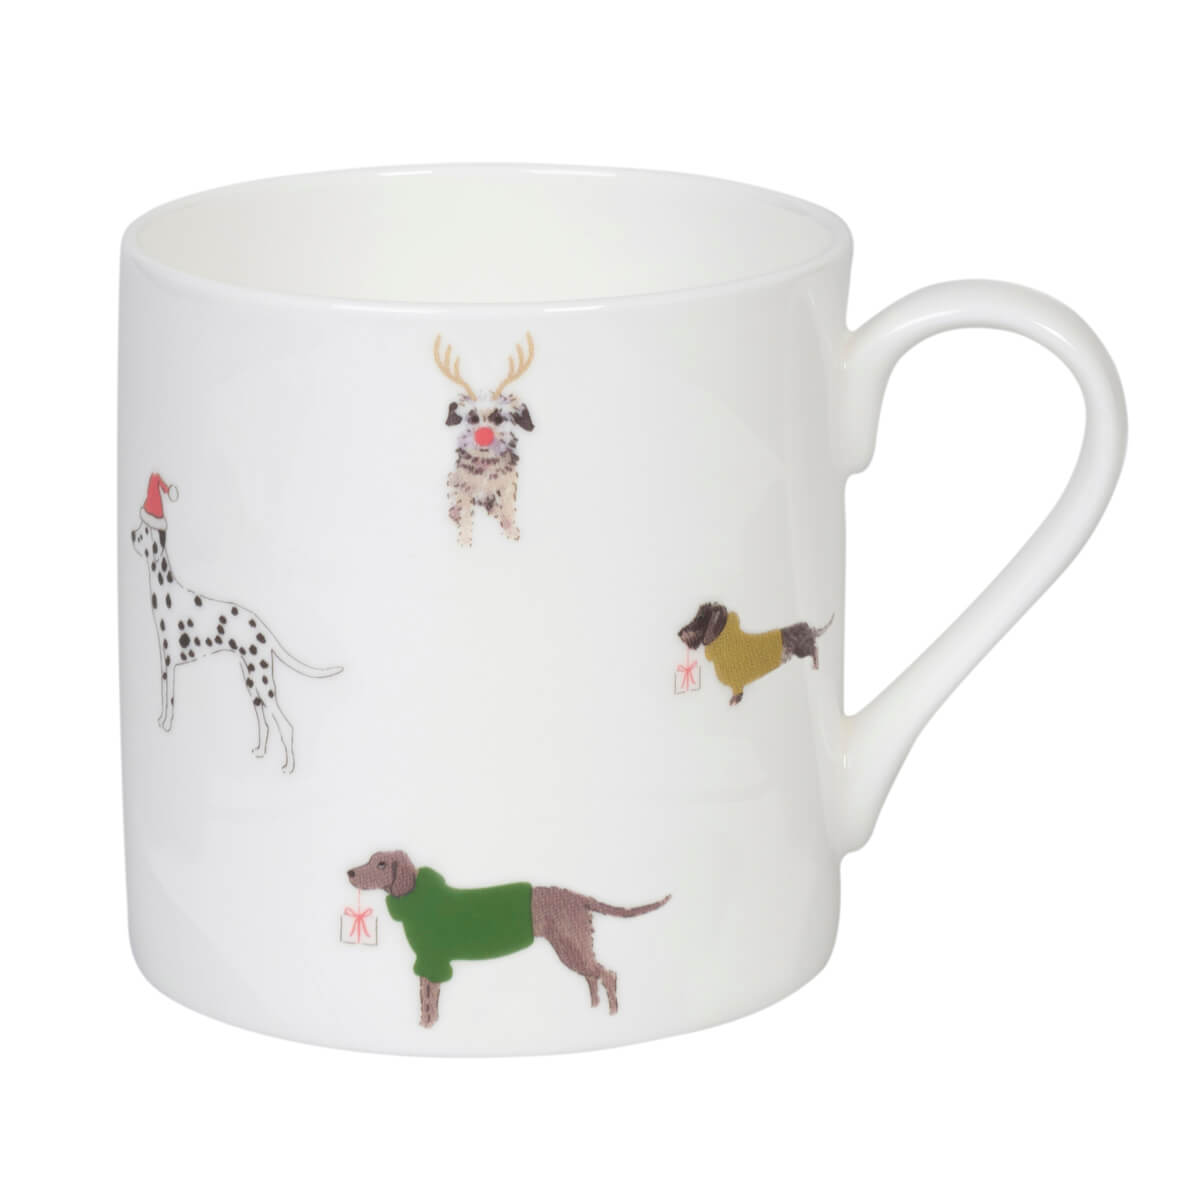 Christmas Dogs Mug Large by Sophie Allport